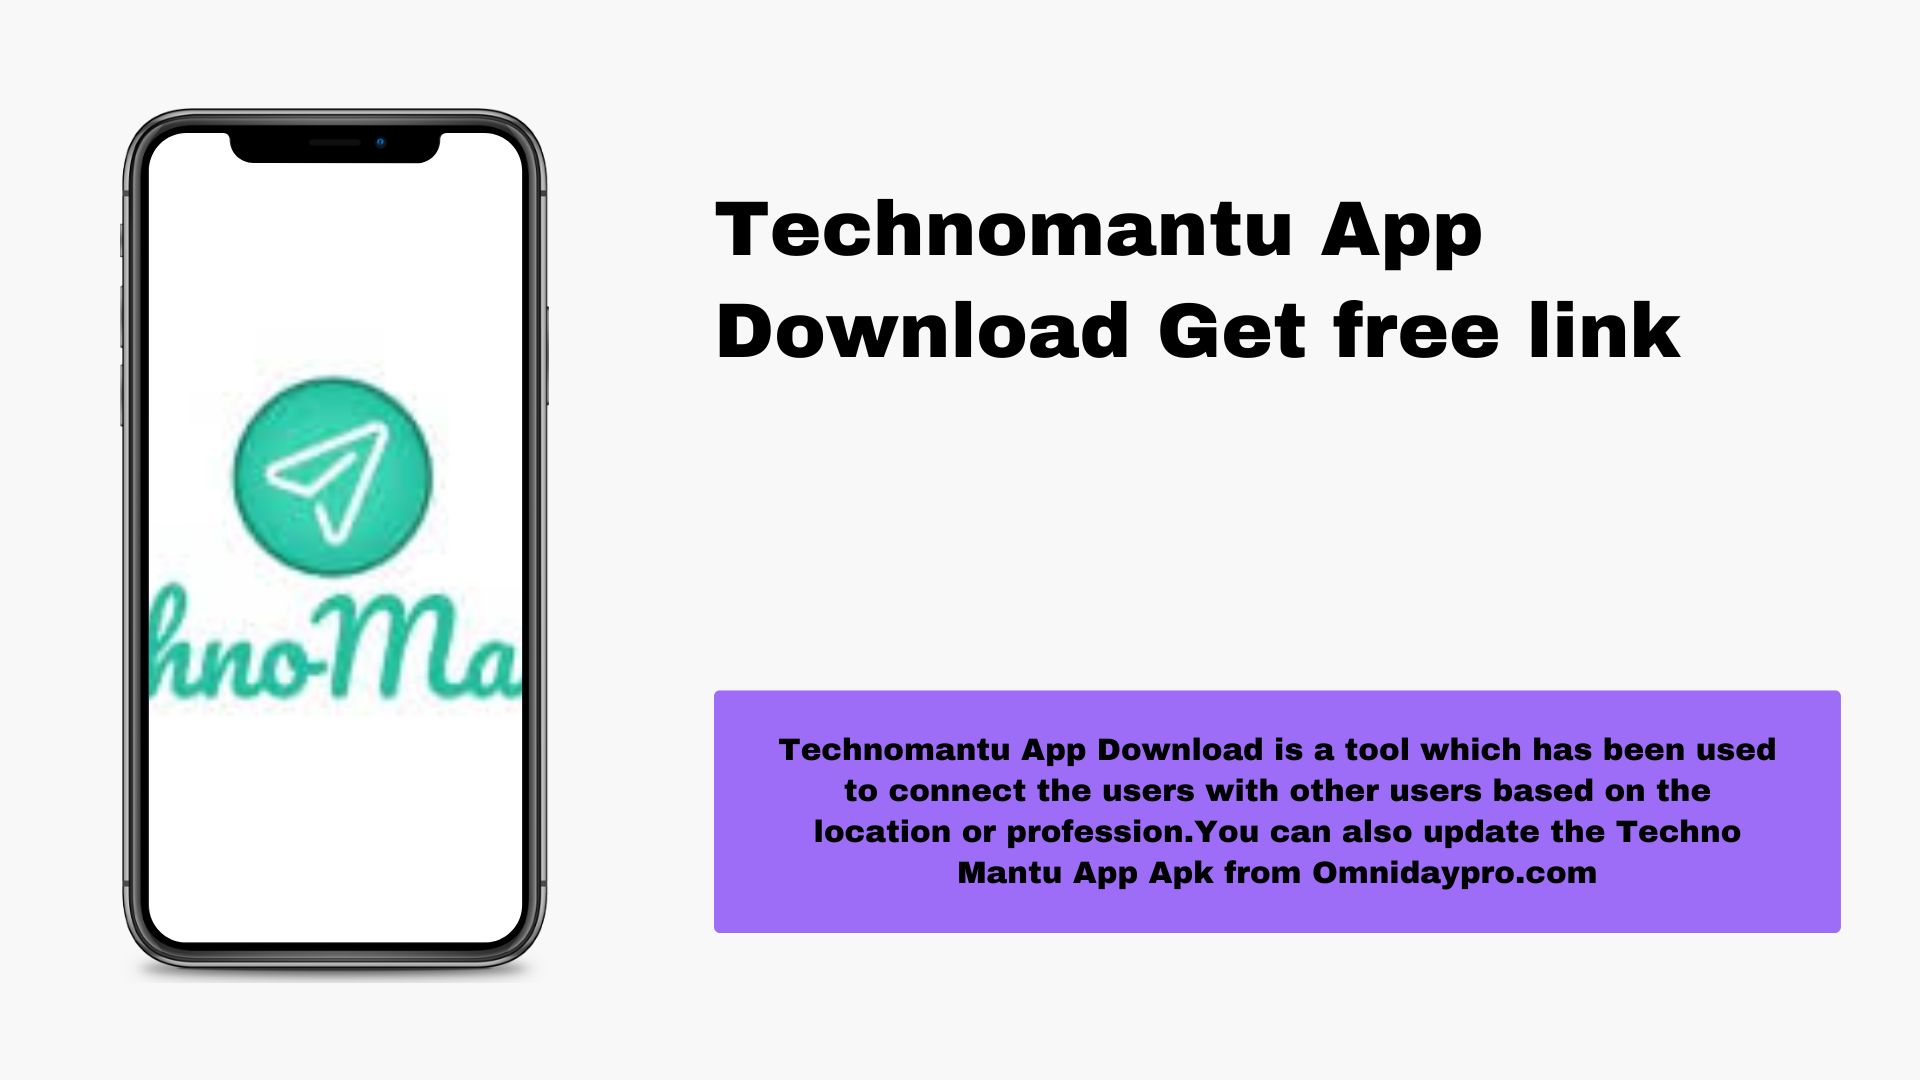 Technomantu App Download Get free link